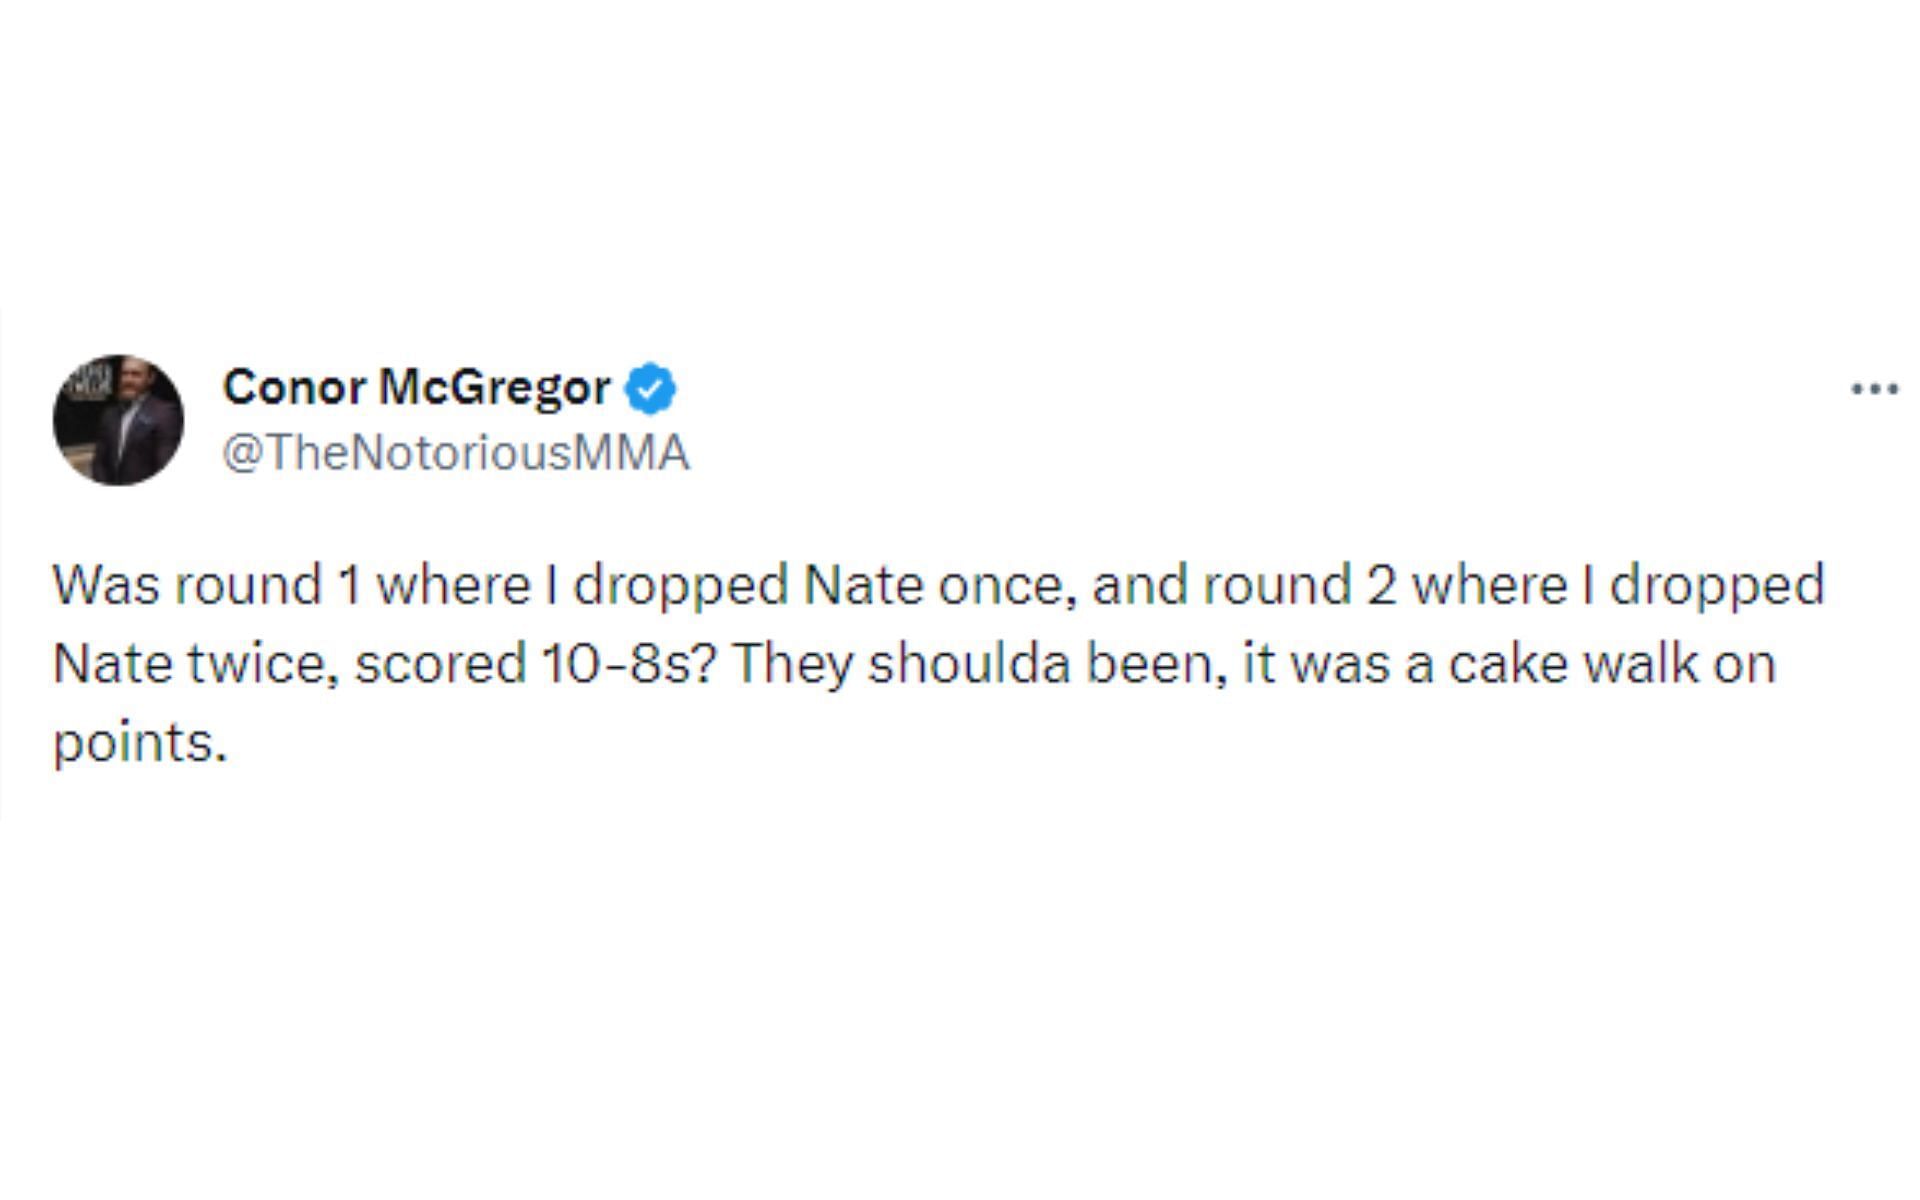 Tweet regarding rematch against Nate Diaz